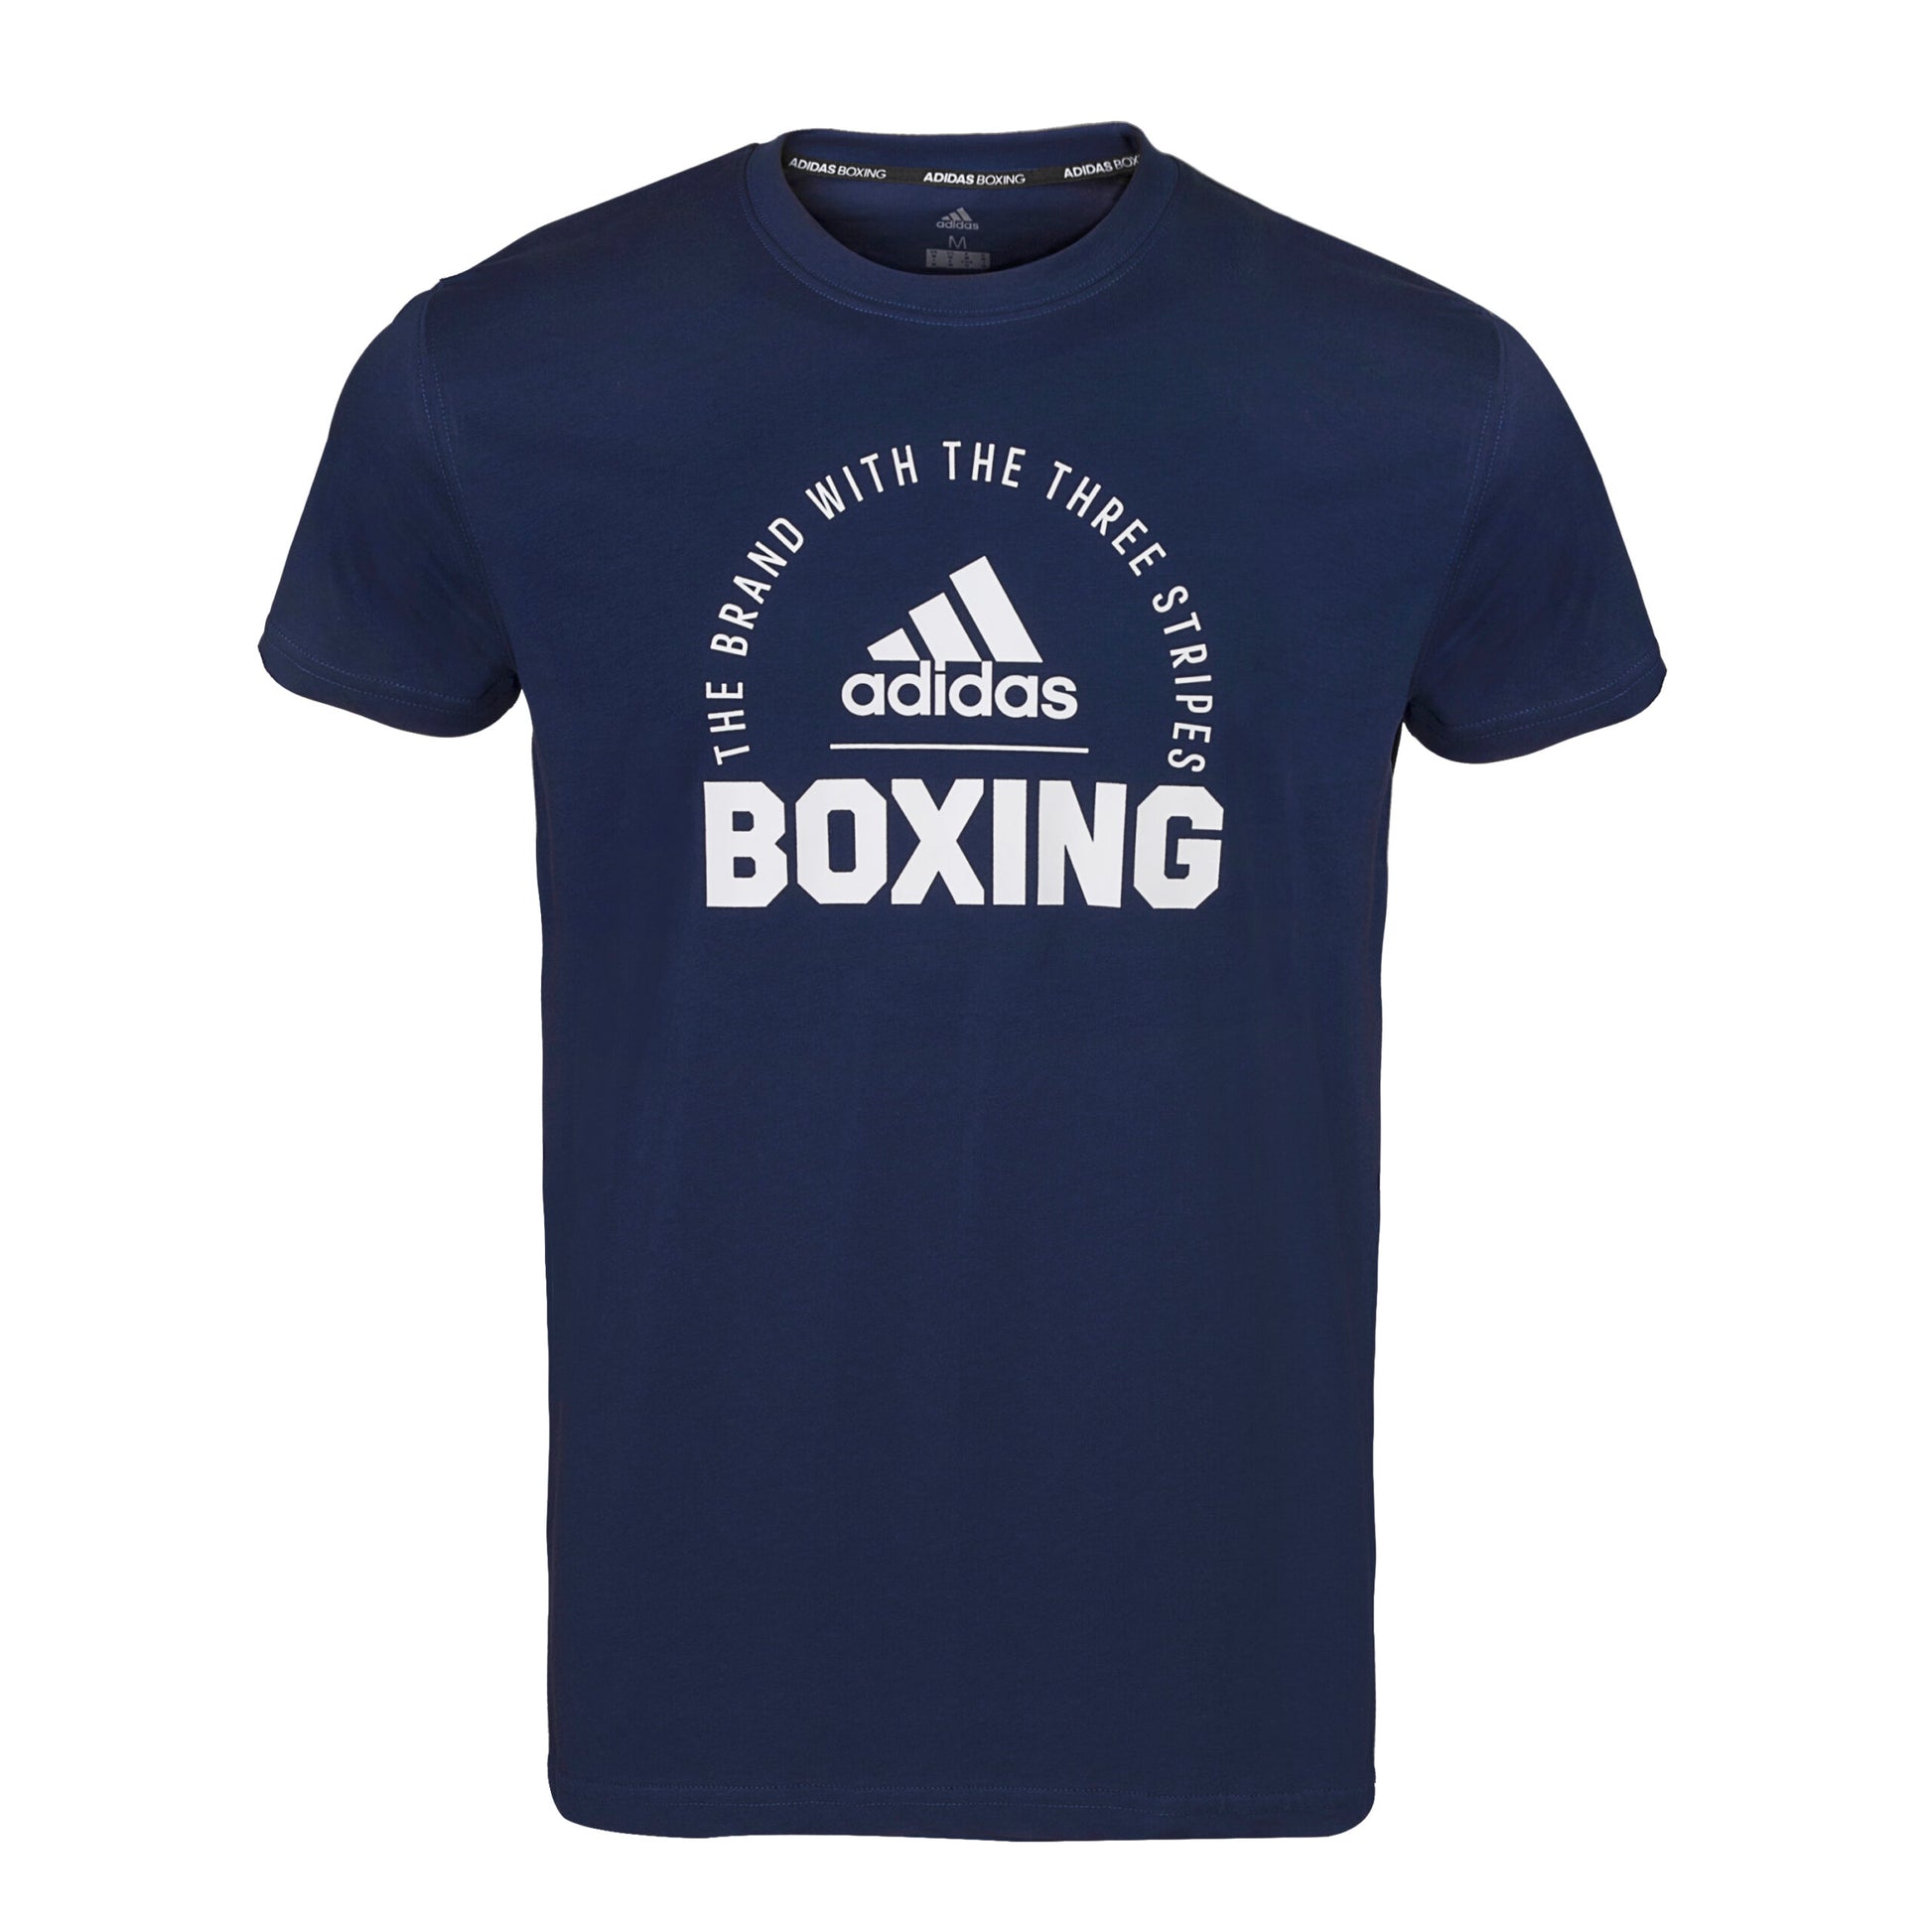 Clts21 B Adidas Boxing T Shirt Blue 01